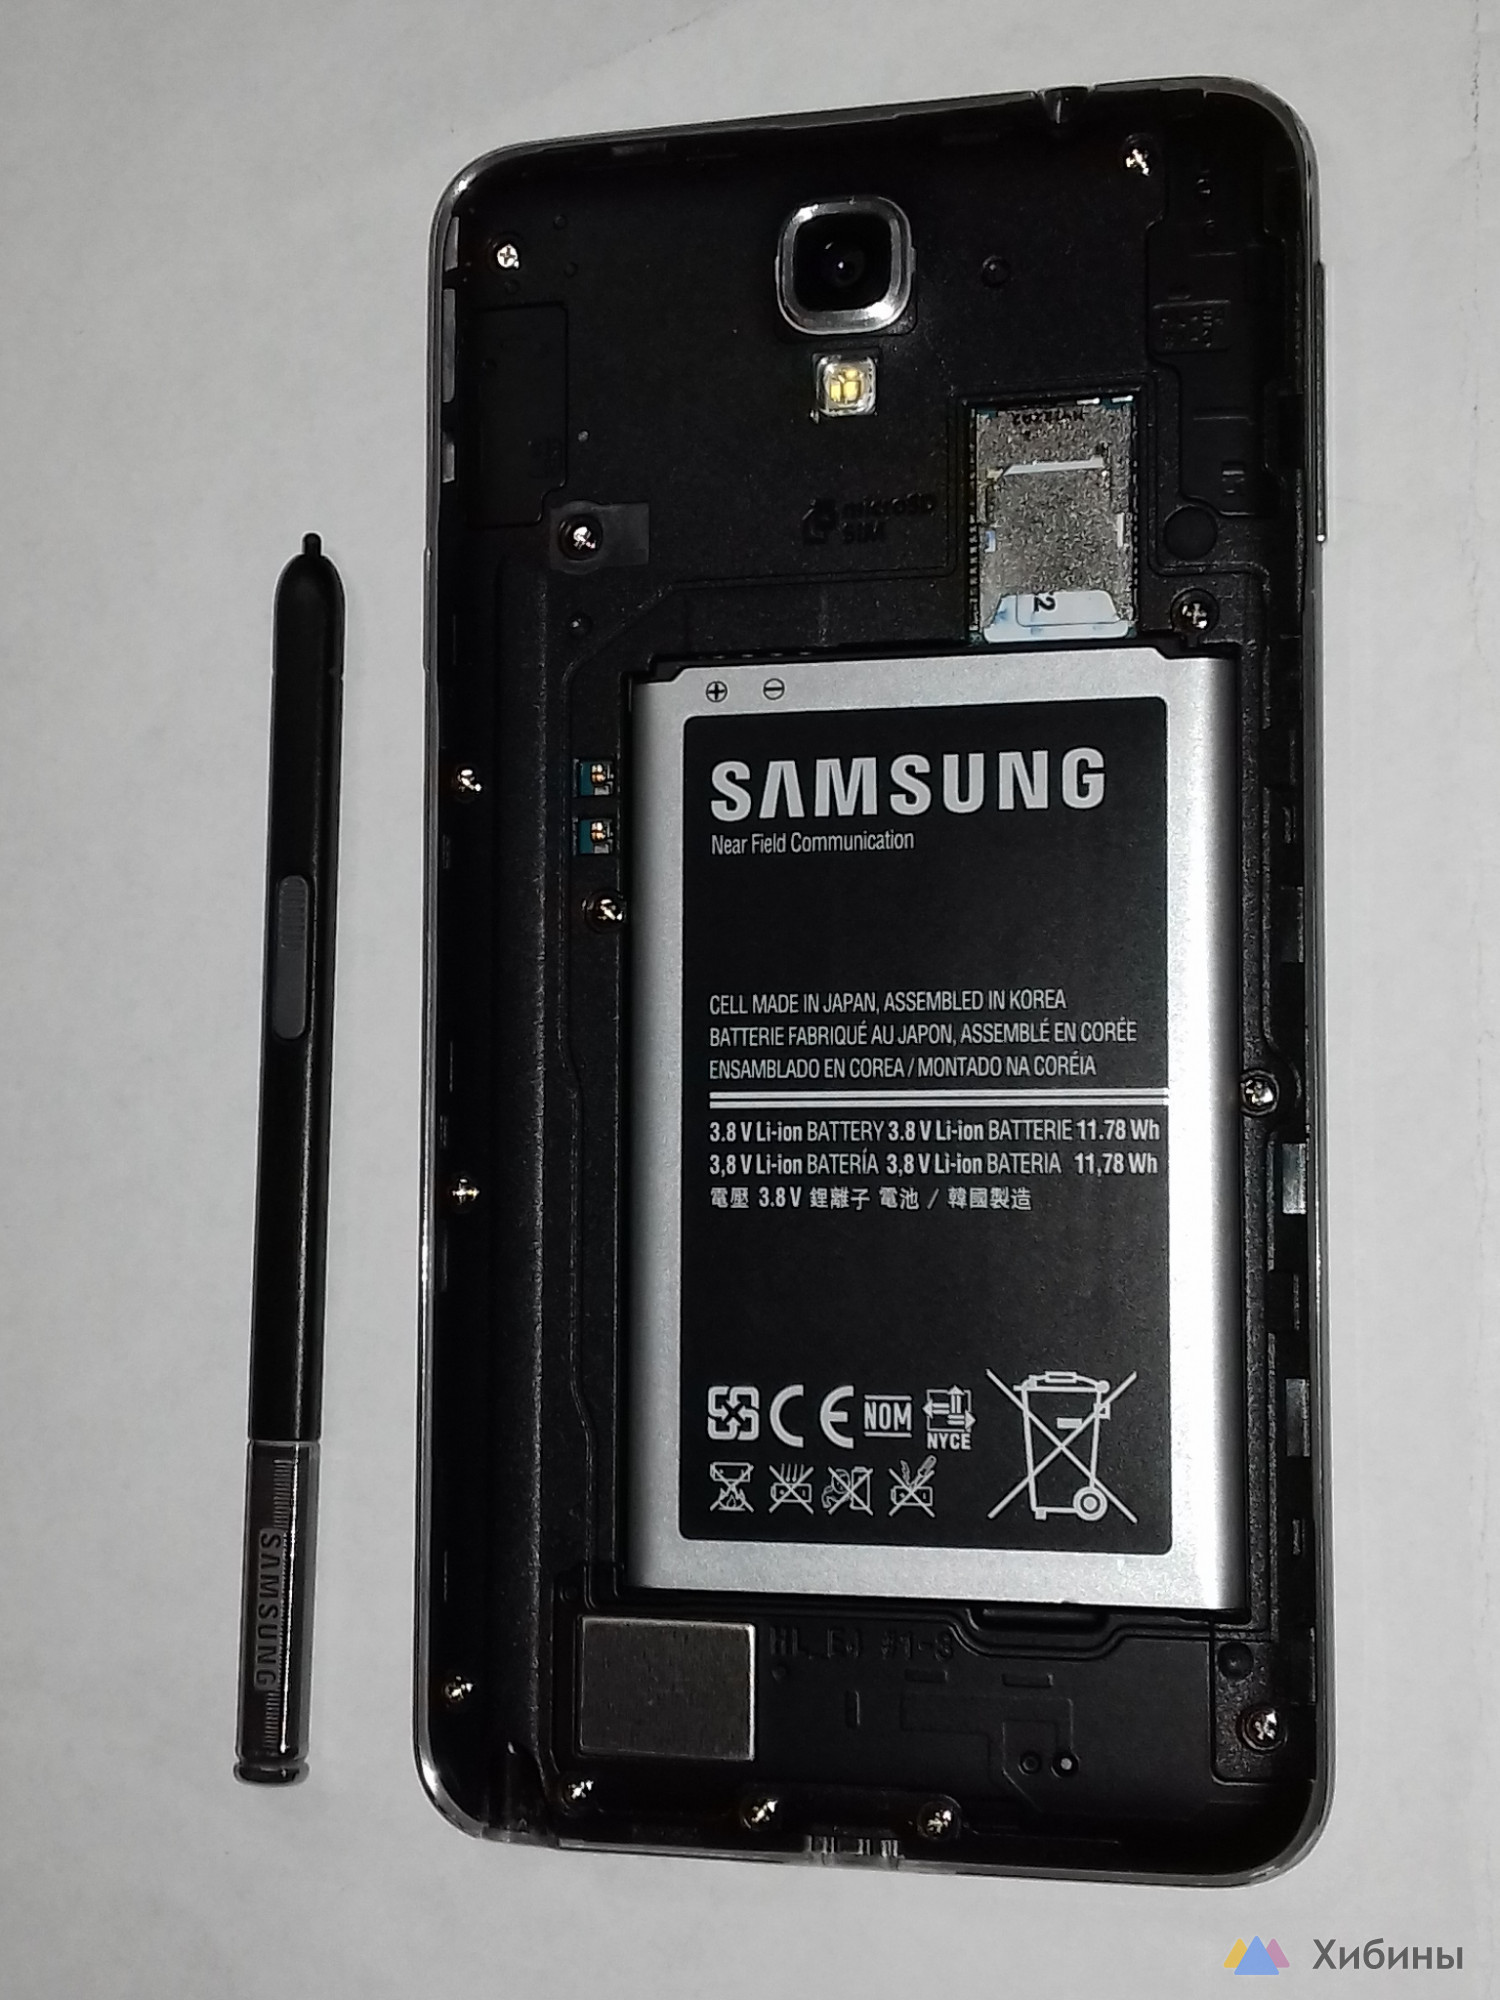 Samsung Galaxy Note 3 Neo SM-N7505